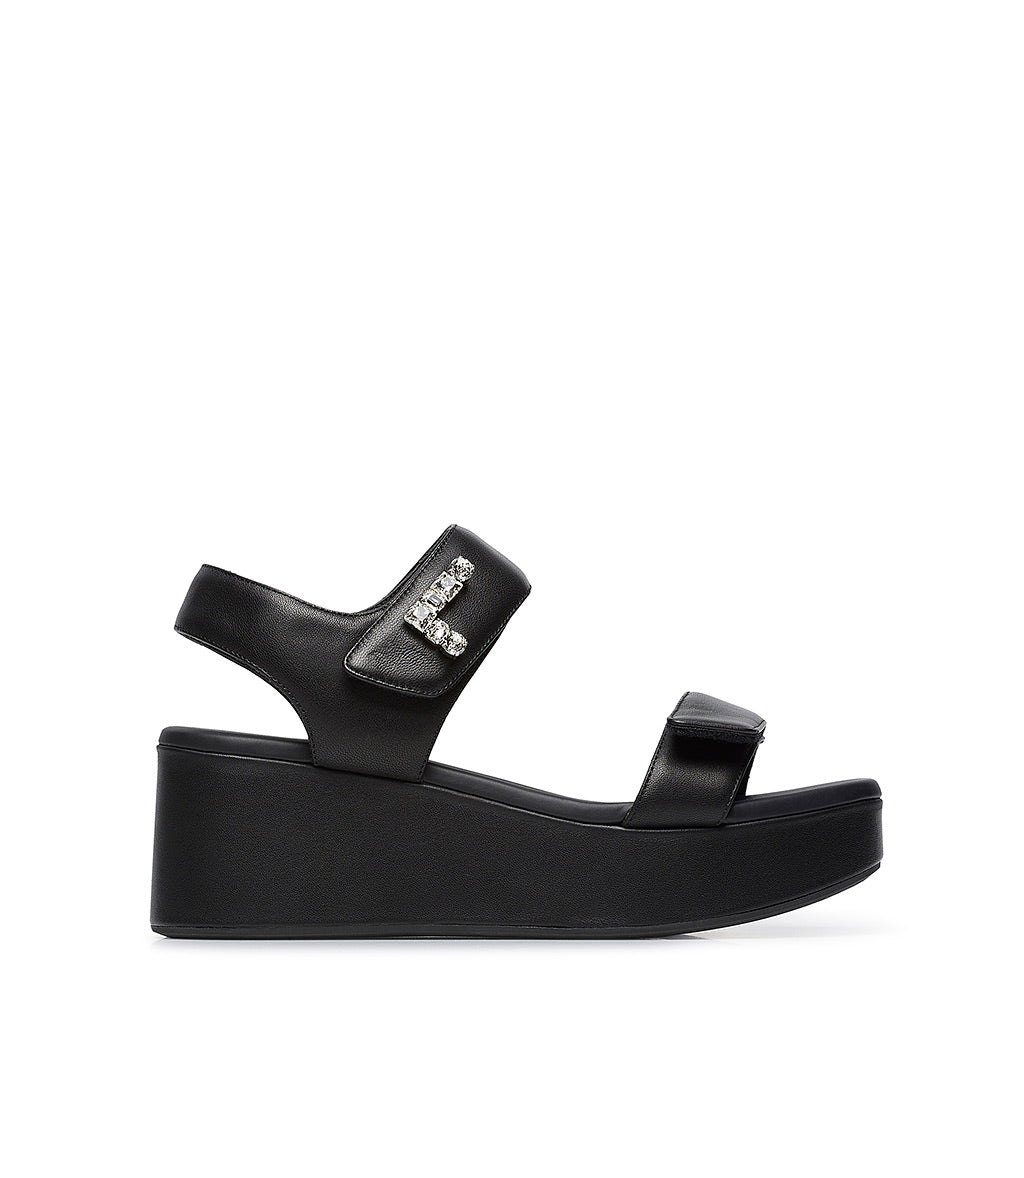 Black nappa leather sandals with crystals – Loriblu.com